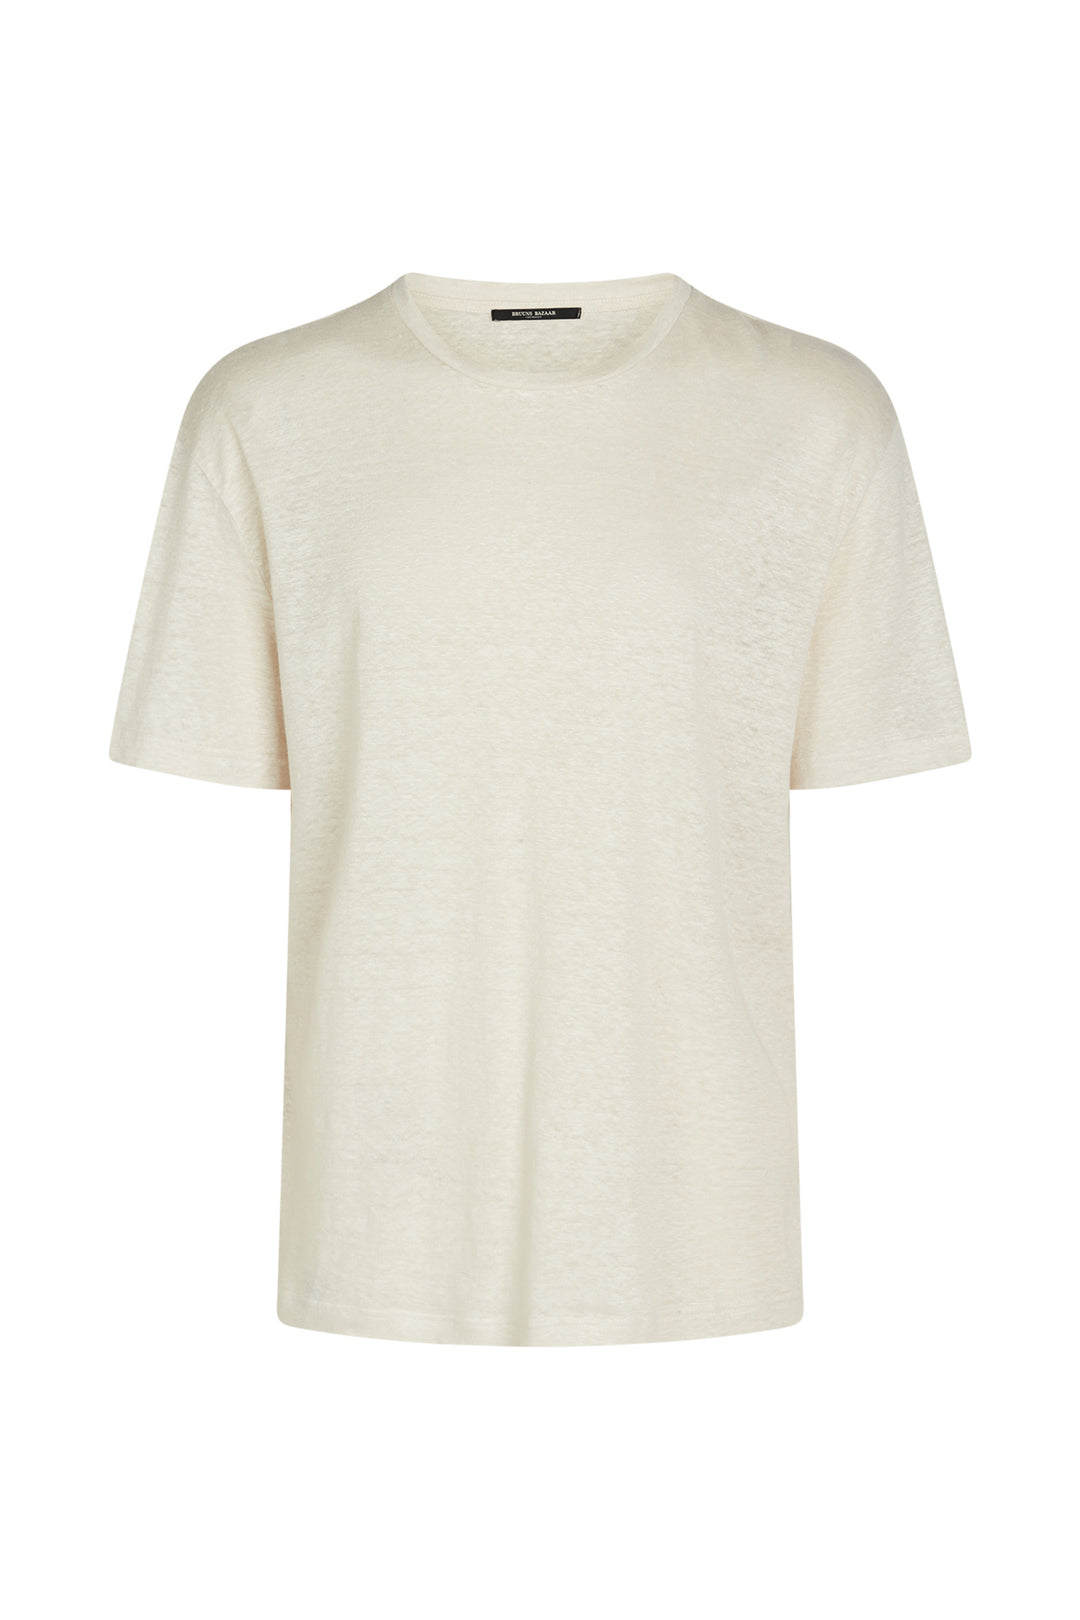 Bruuns Bazaar Men LinenBBRound tee T-shirts Kit